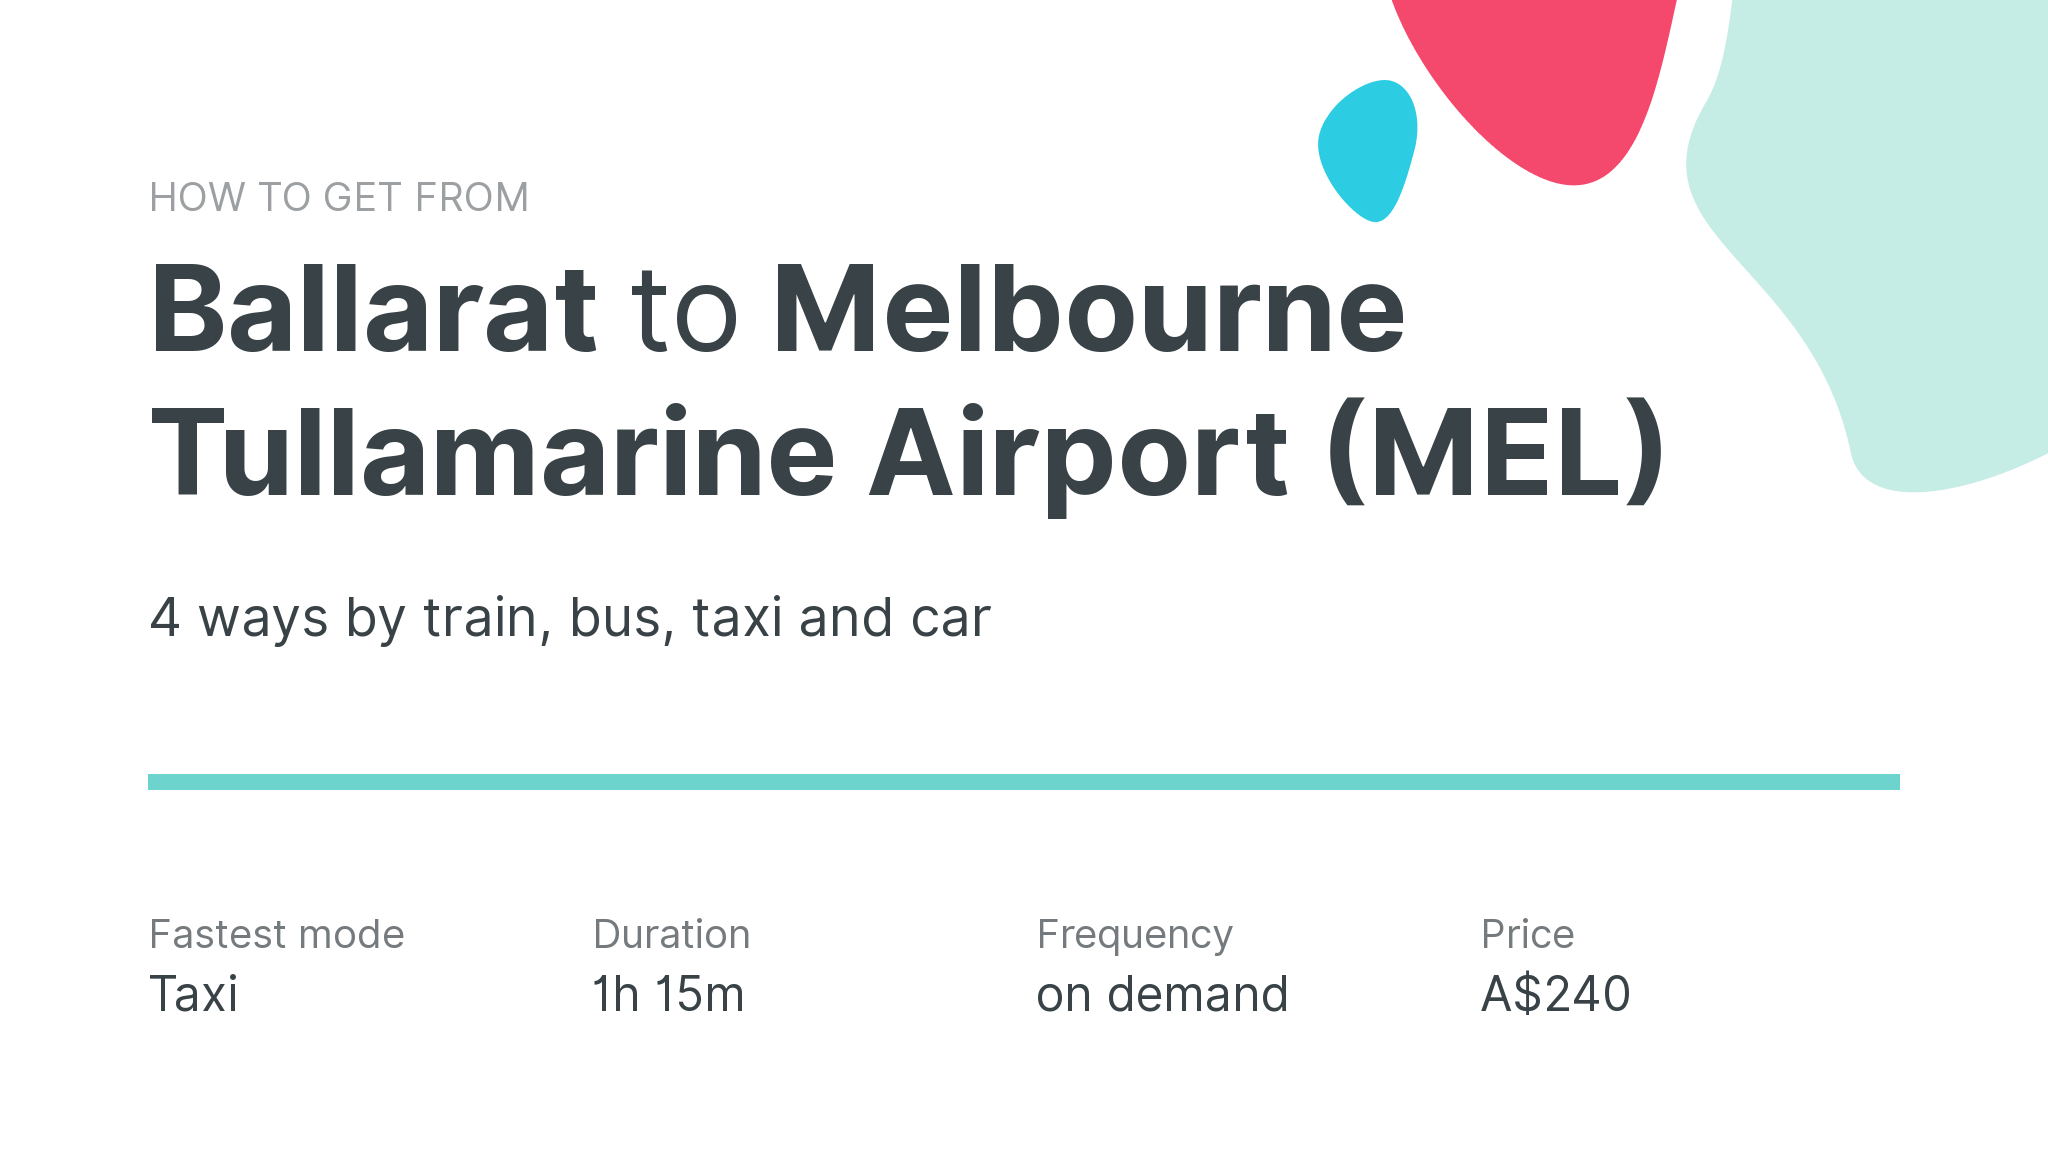 How do I get from Ballarat to Melbourne Tullamarine Airport (MEL)